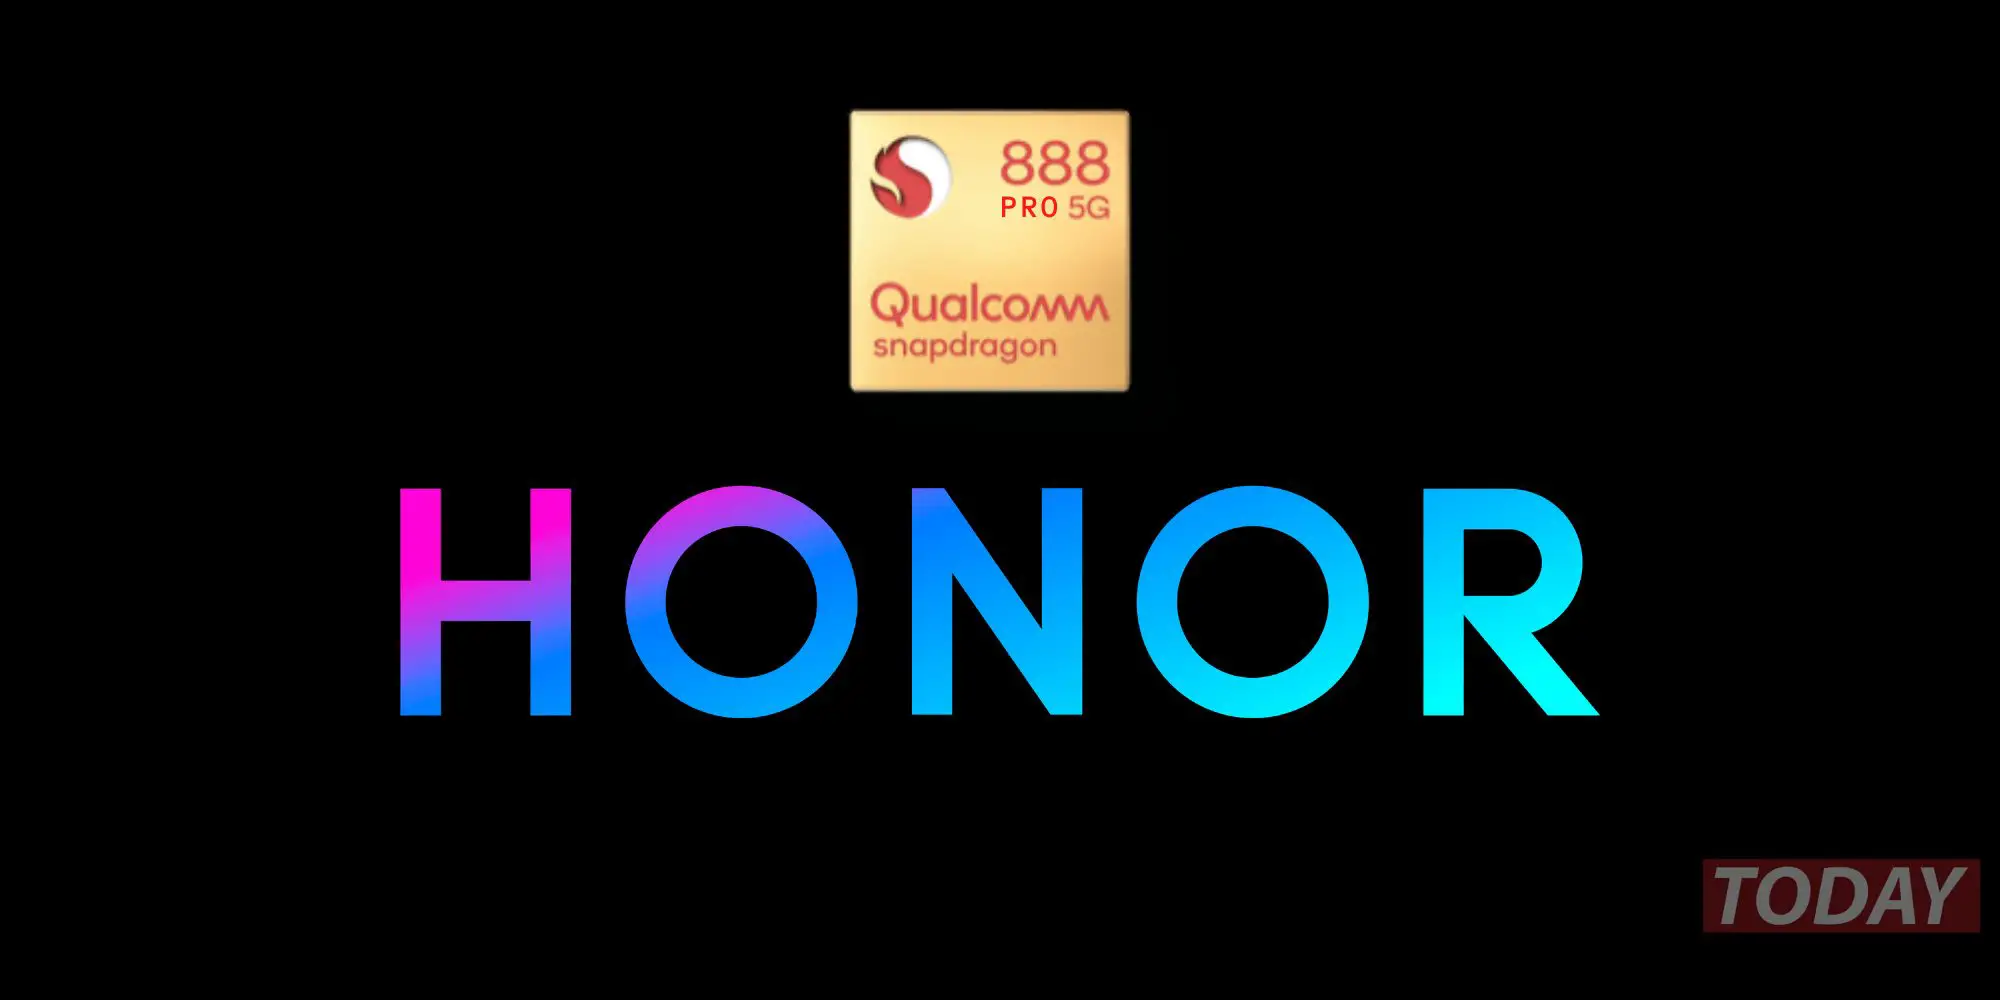 honor con snapdragon 888 pro